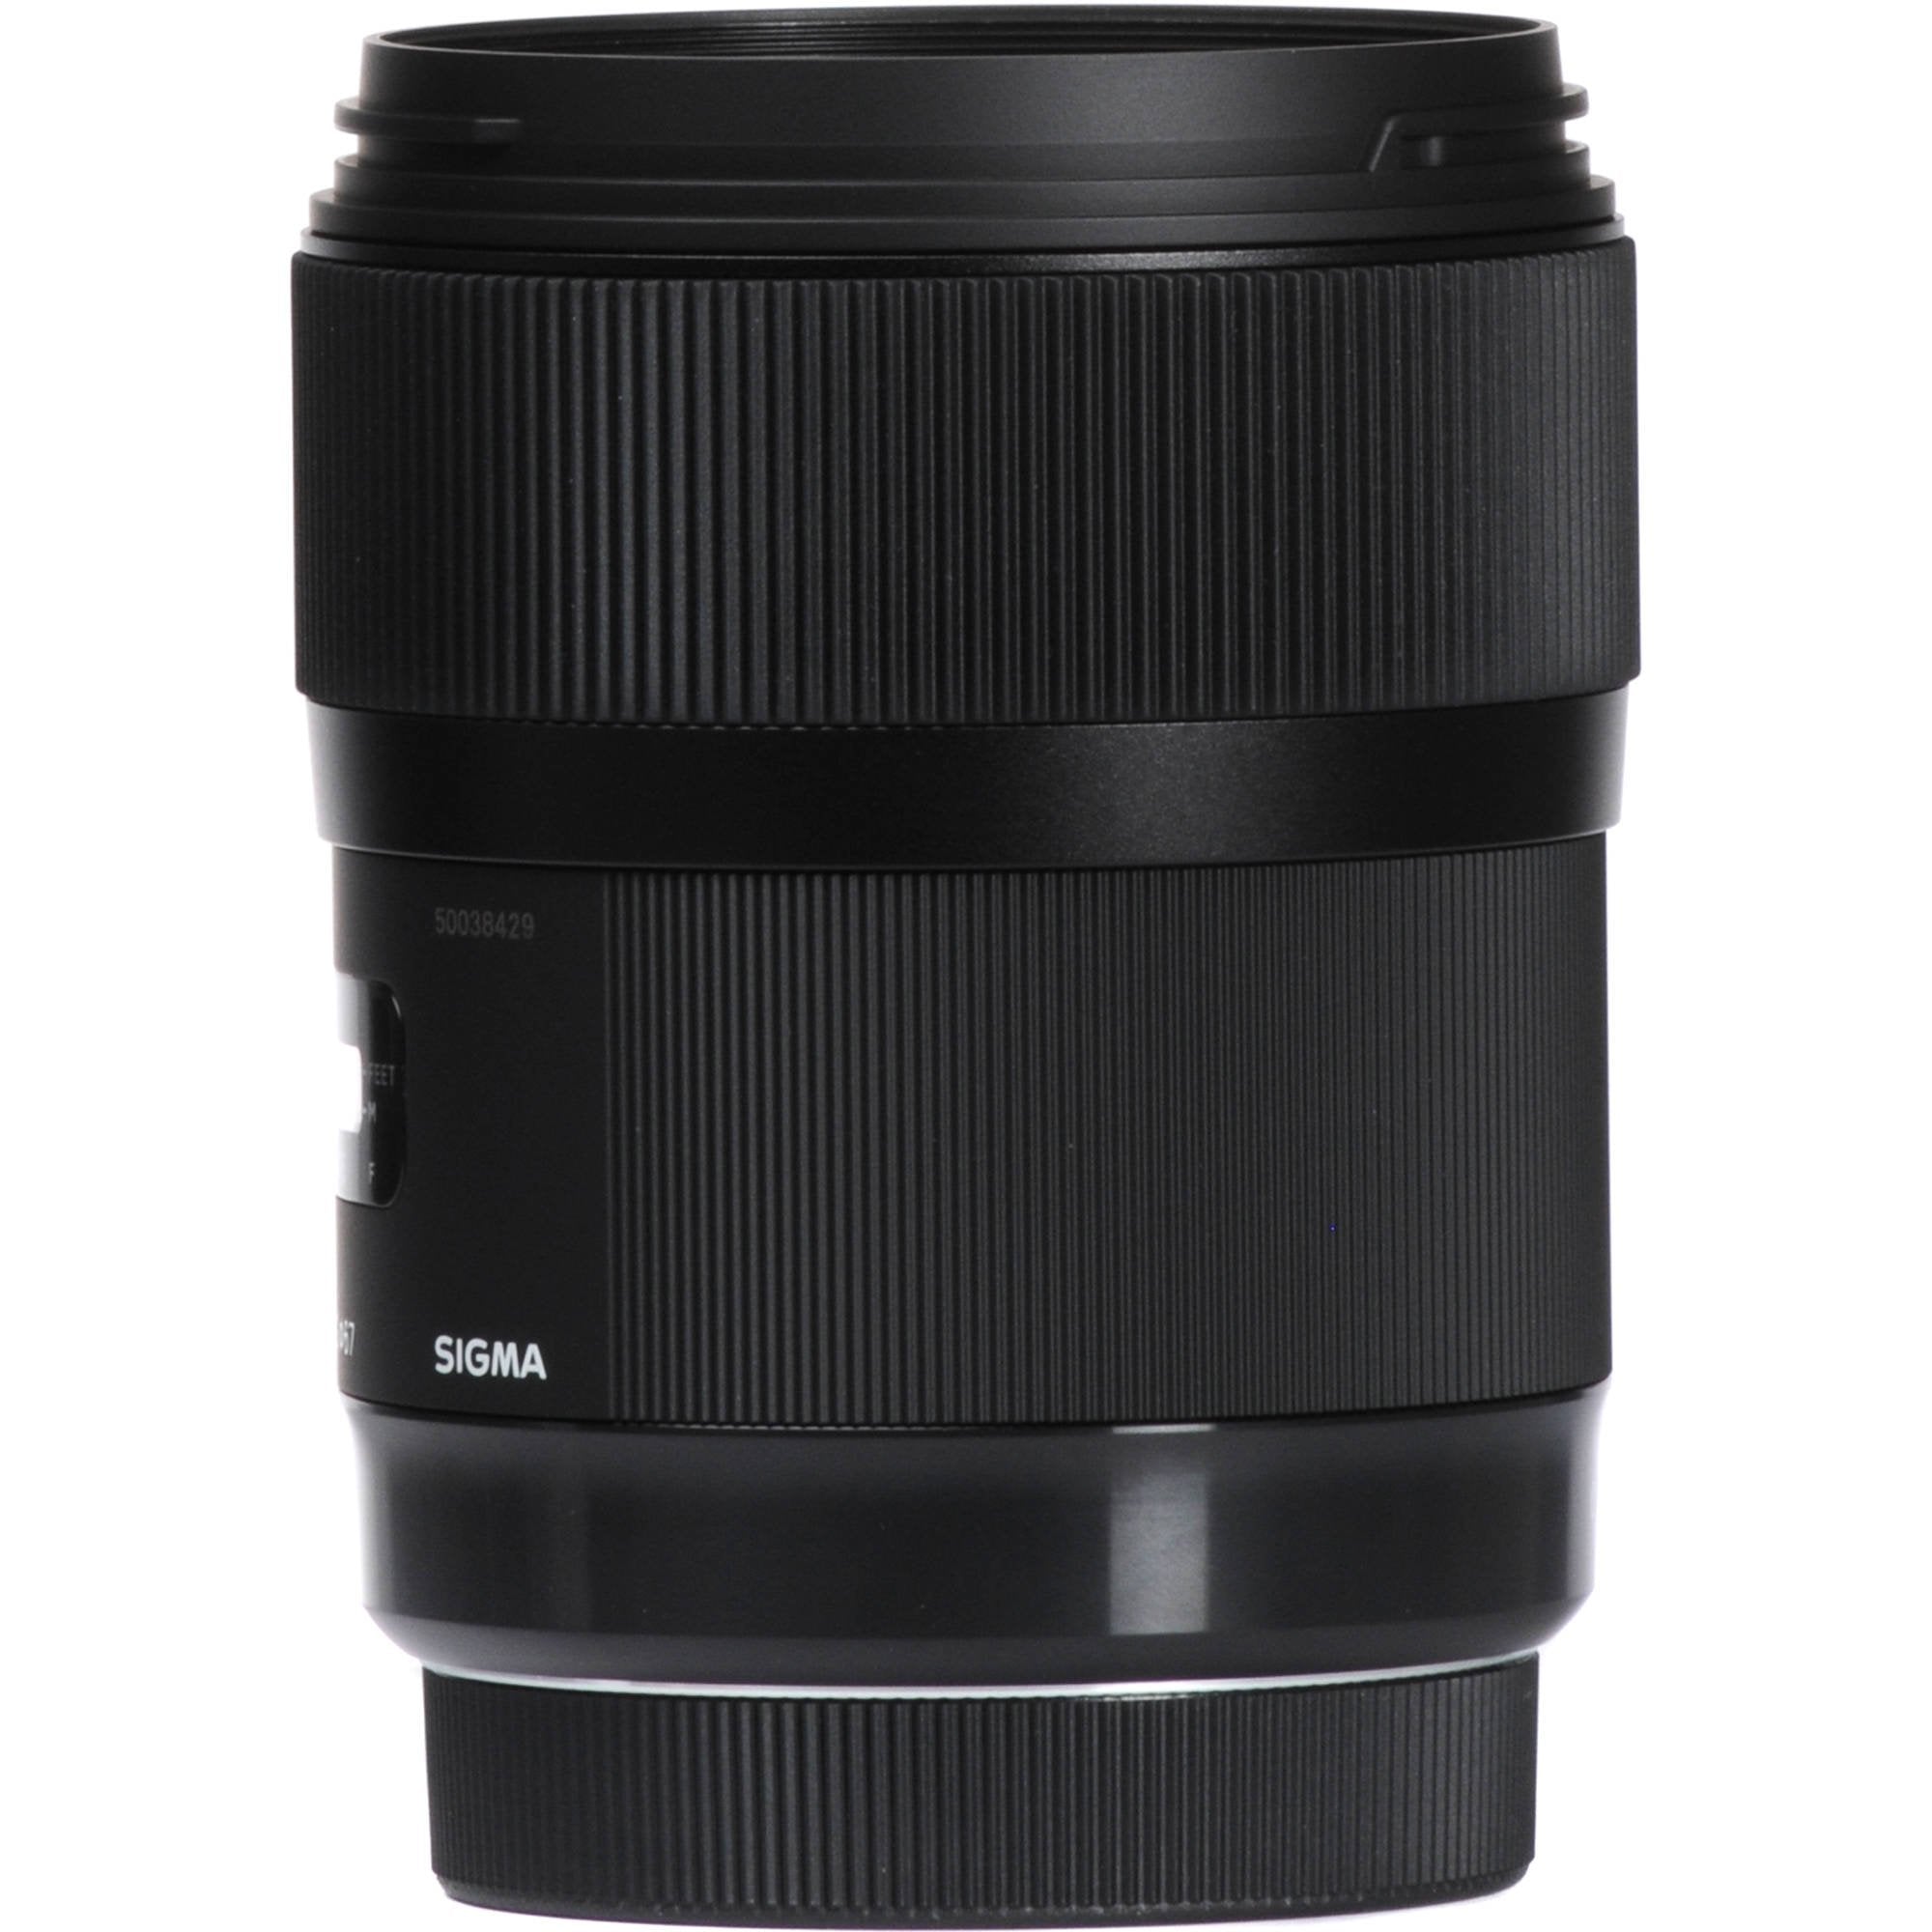 Sigma 35mm f/1.4 DG HSM Art Lens International Version Professional Accessory Combo